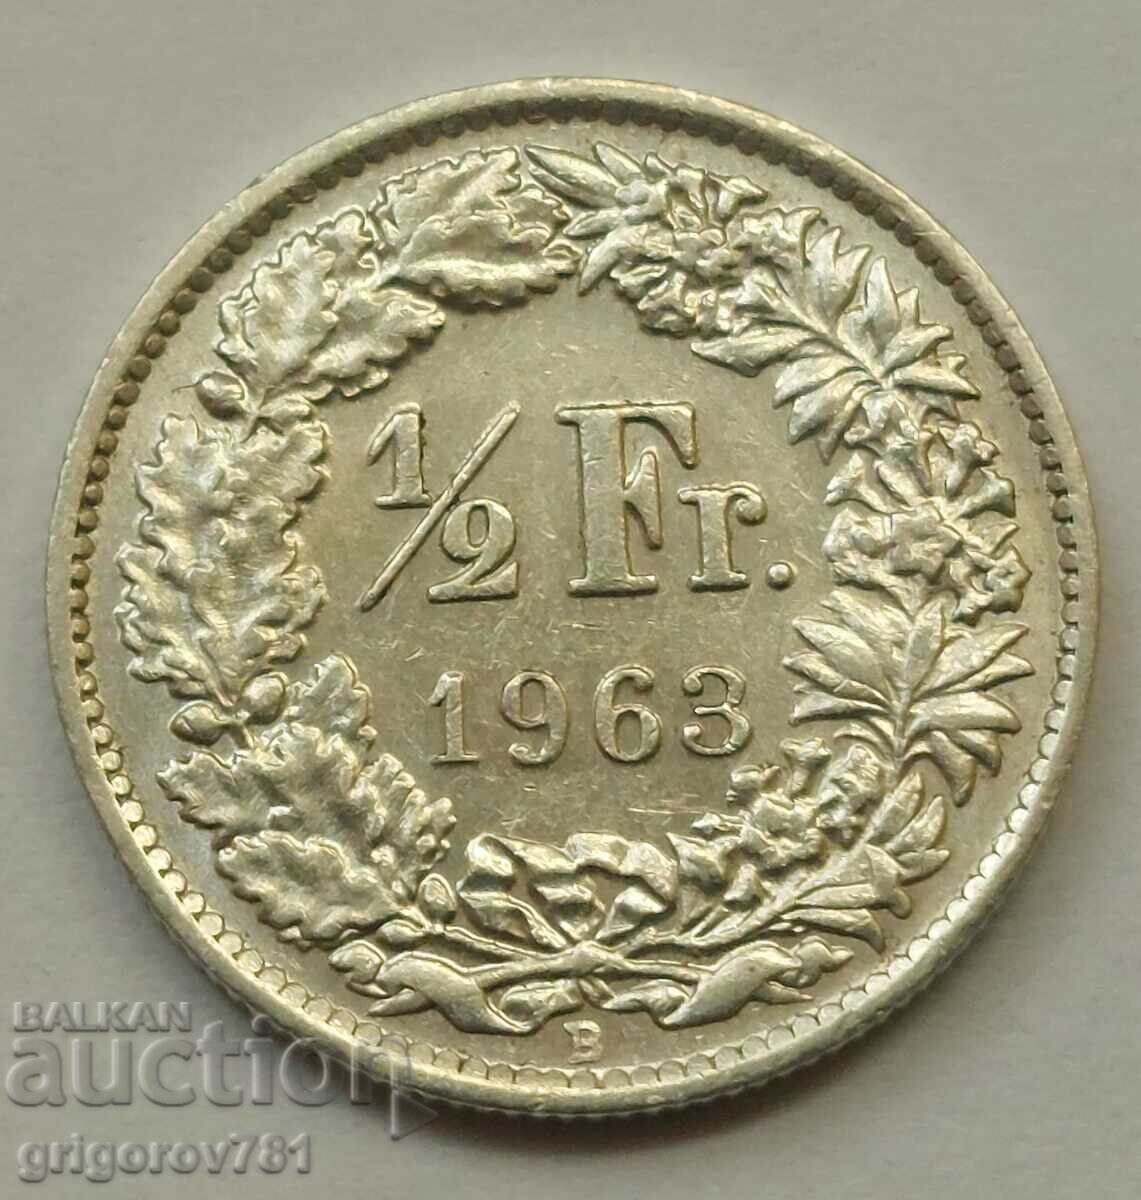 1/2 Franc Silver Switzerland 1963 B - Silver Coin #134